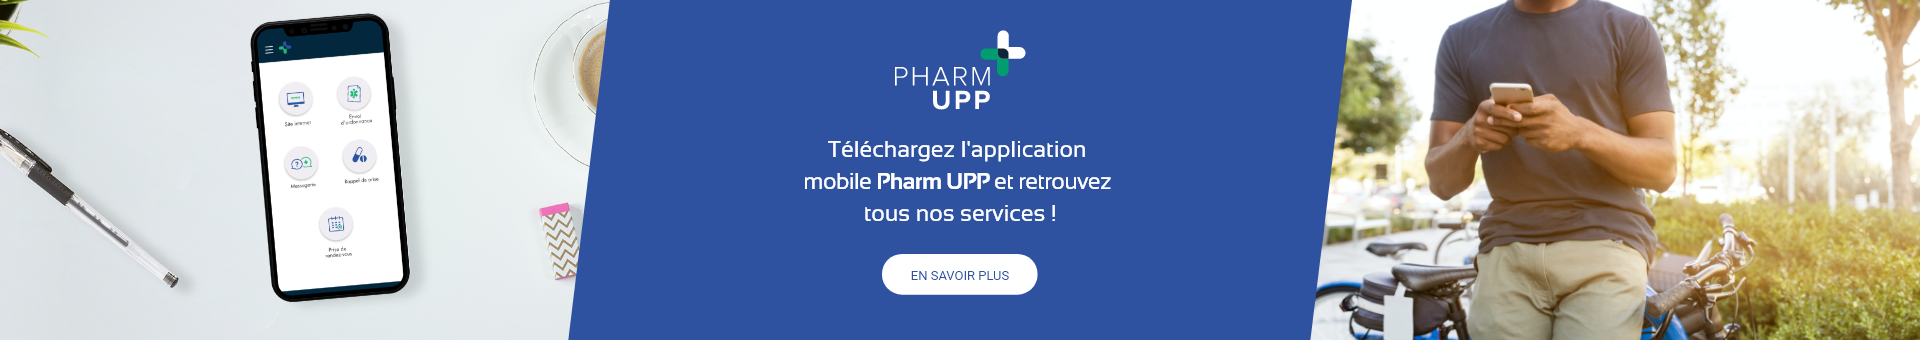 Pharmacie Parant,Aix-en-Provence